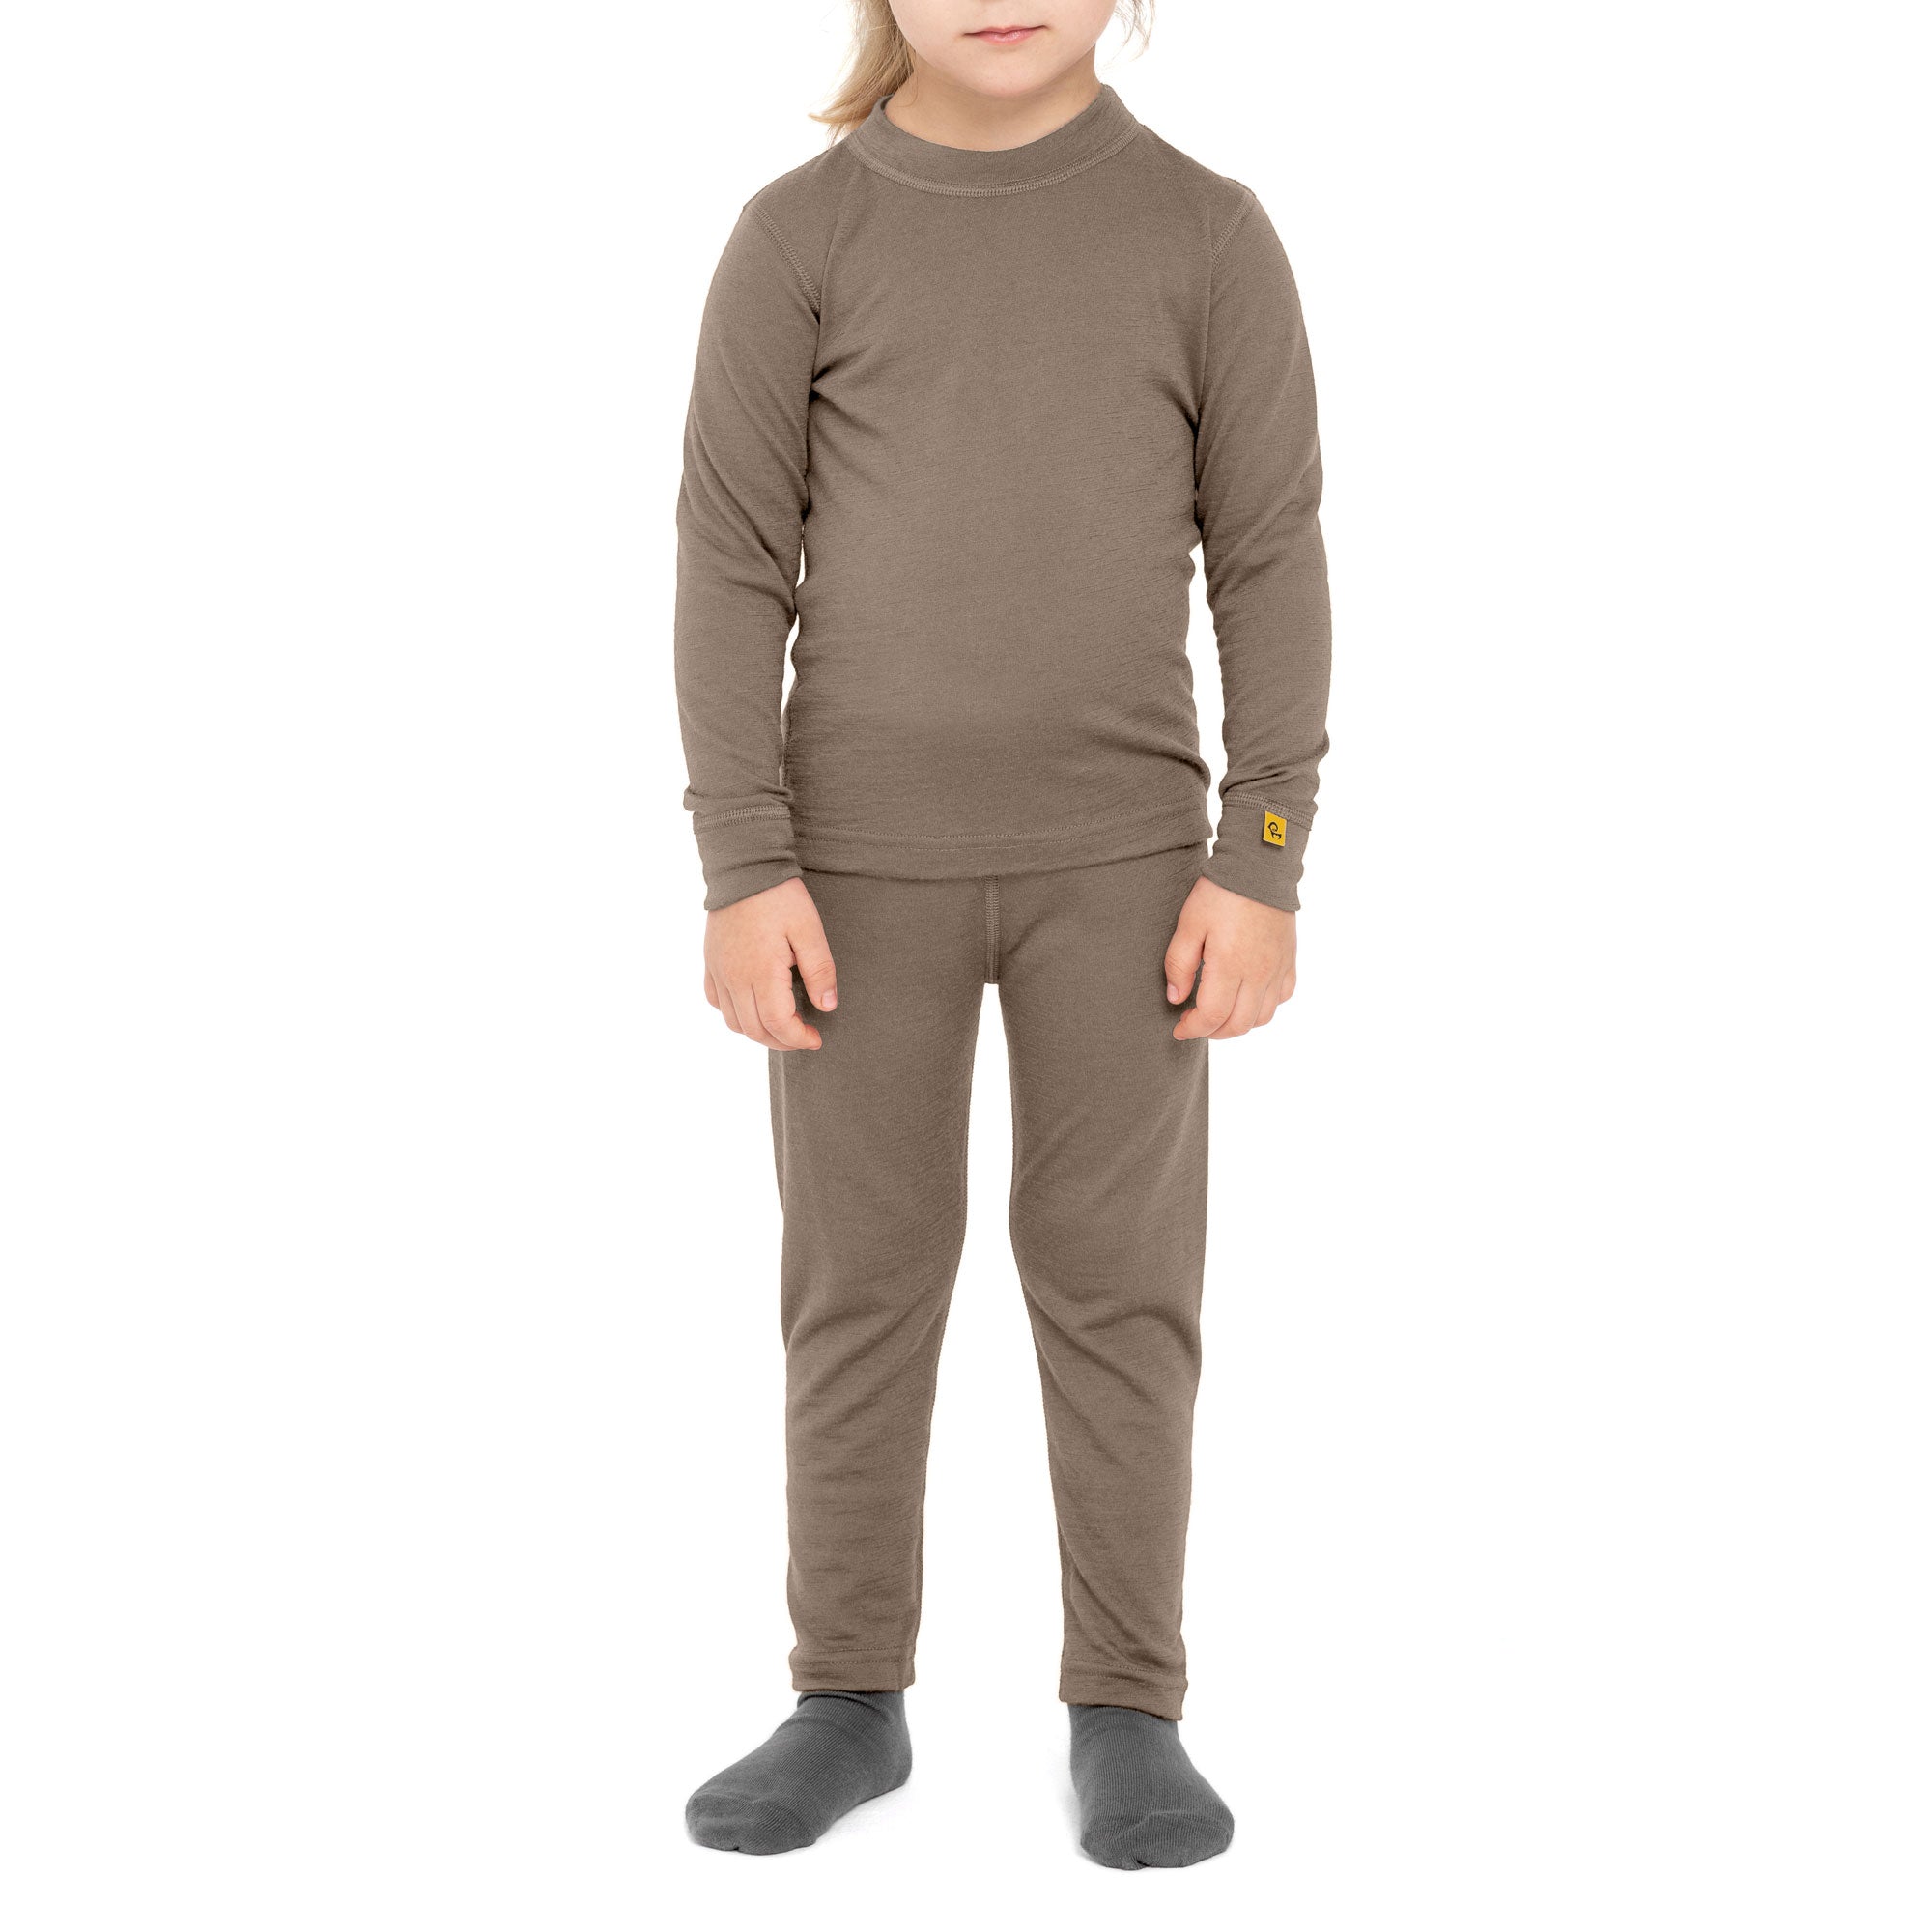 Organic Kids Matching Set * Merino Wool Base Layer Matching Outfit 160  Beige